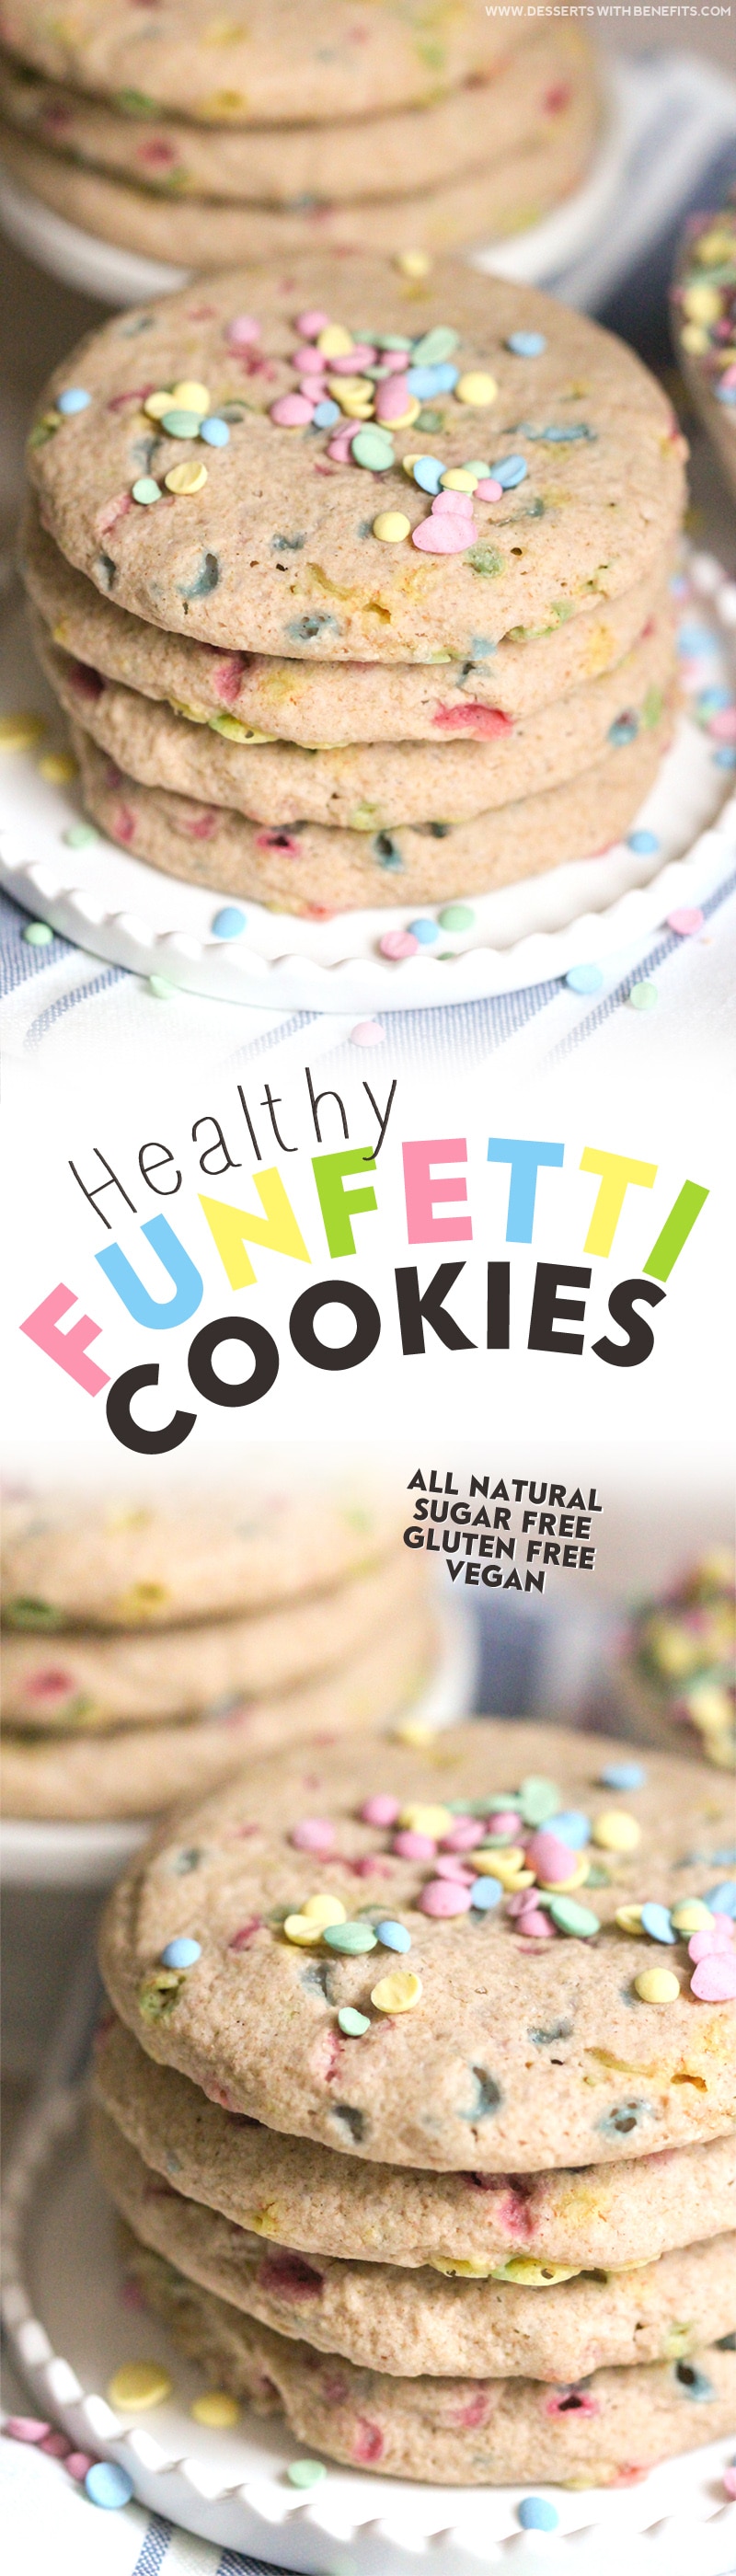 Healthy Funfetti Sugar Cookies recipe (all natural, sugar free, gluten free, dairy free, vegan) - Healthy Dessert Recipes at Desserts with Benefits